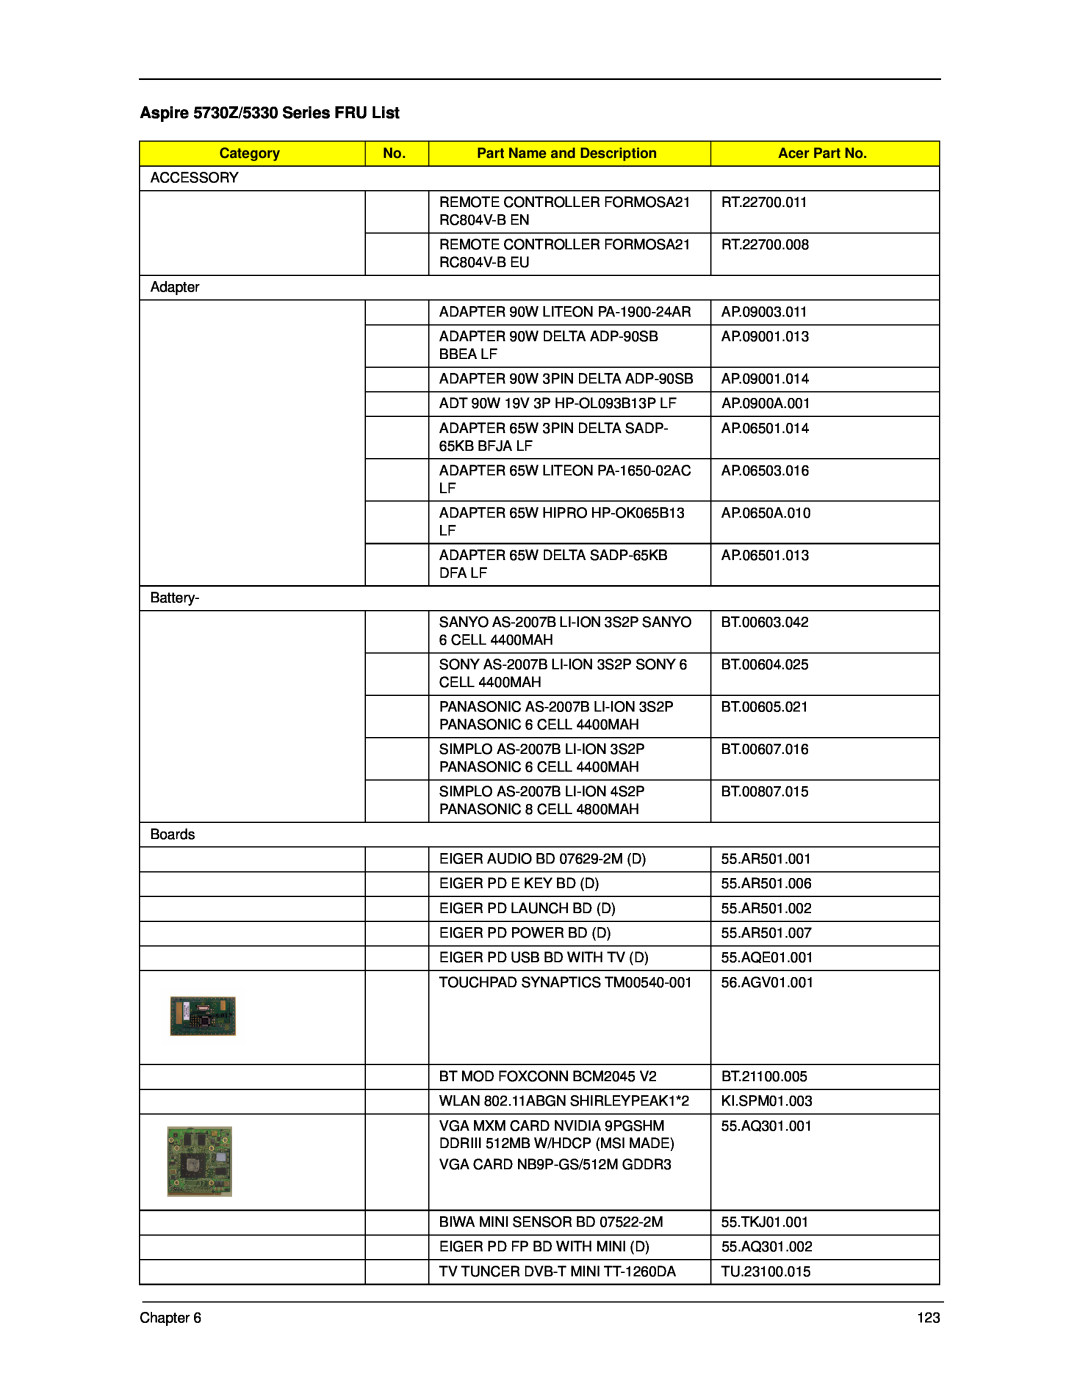 Acer manual Aspire 5730Z/5330 Series FRU List, Category, Part Name and Description, Acer Part No 